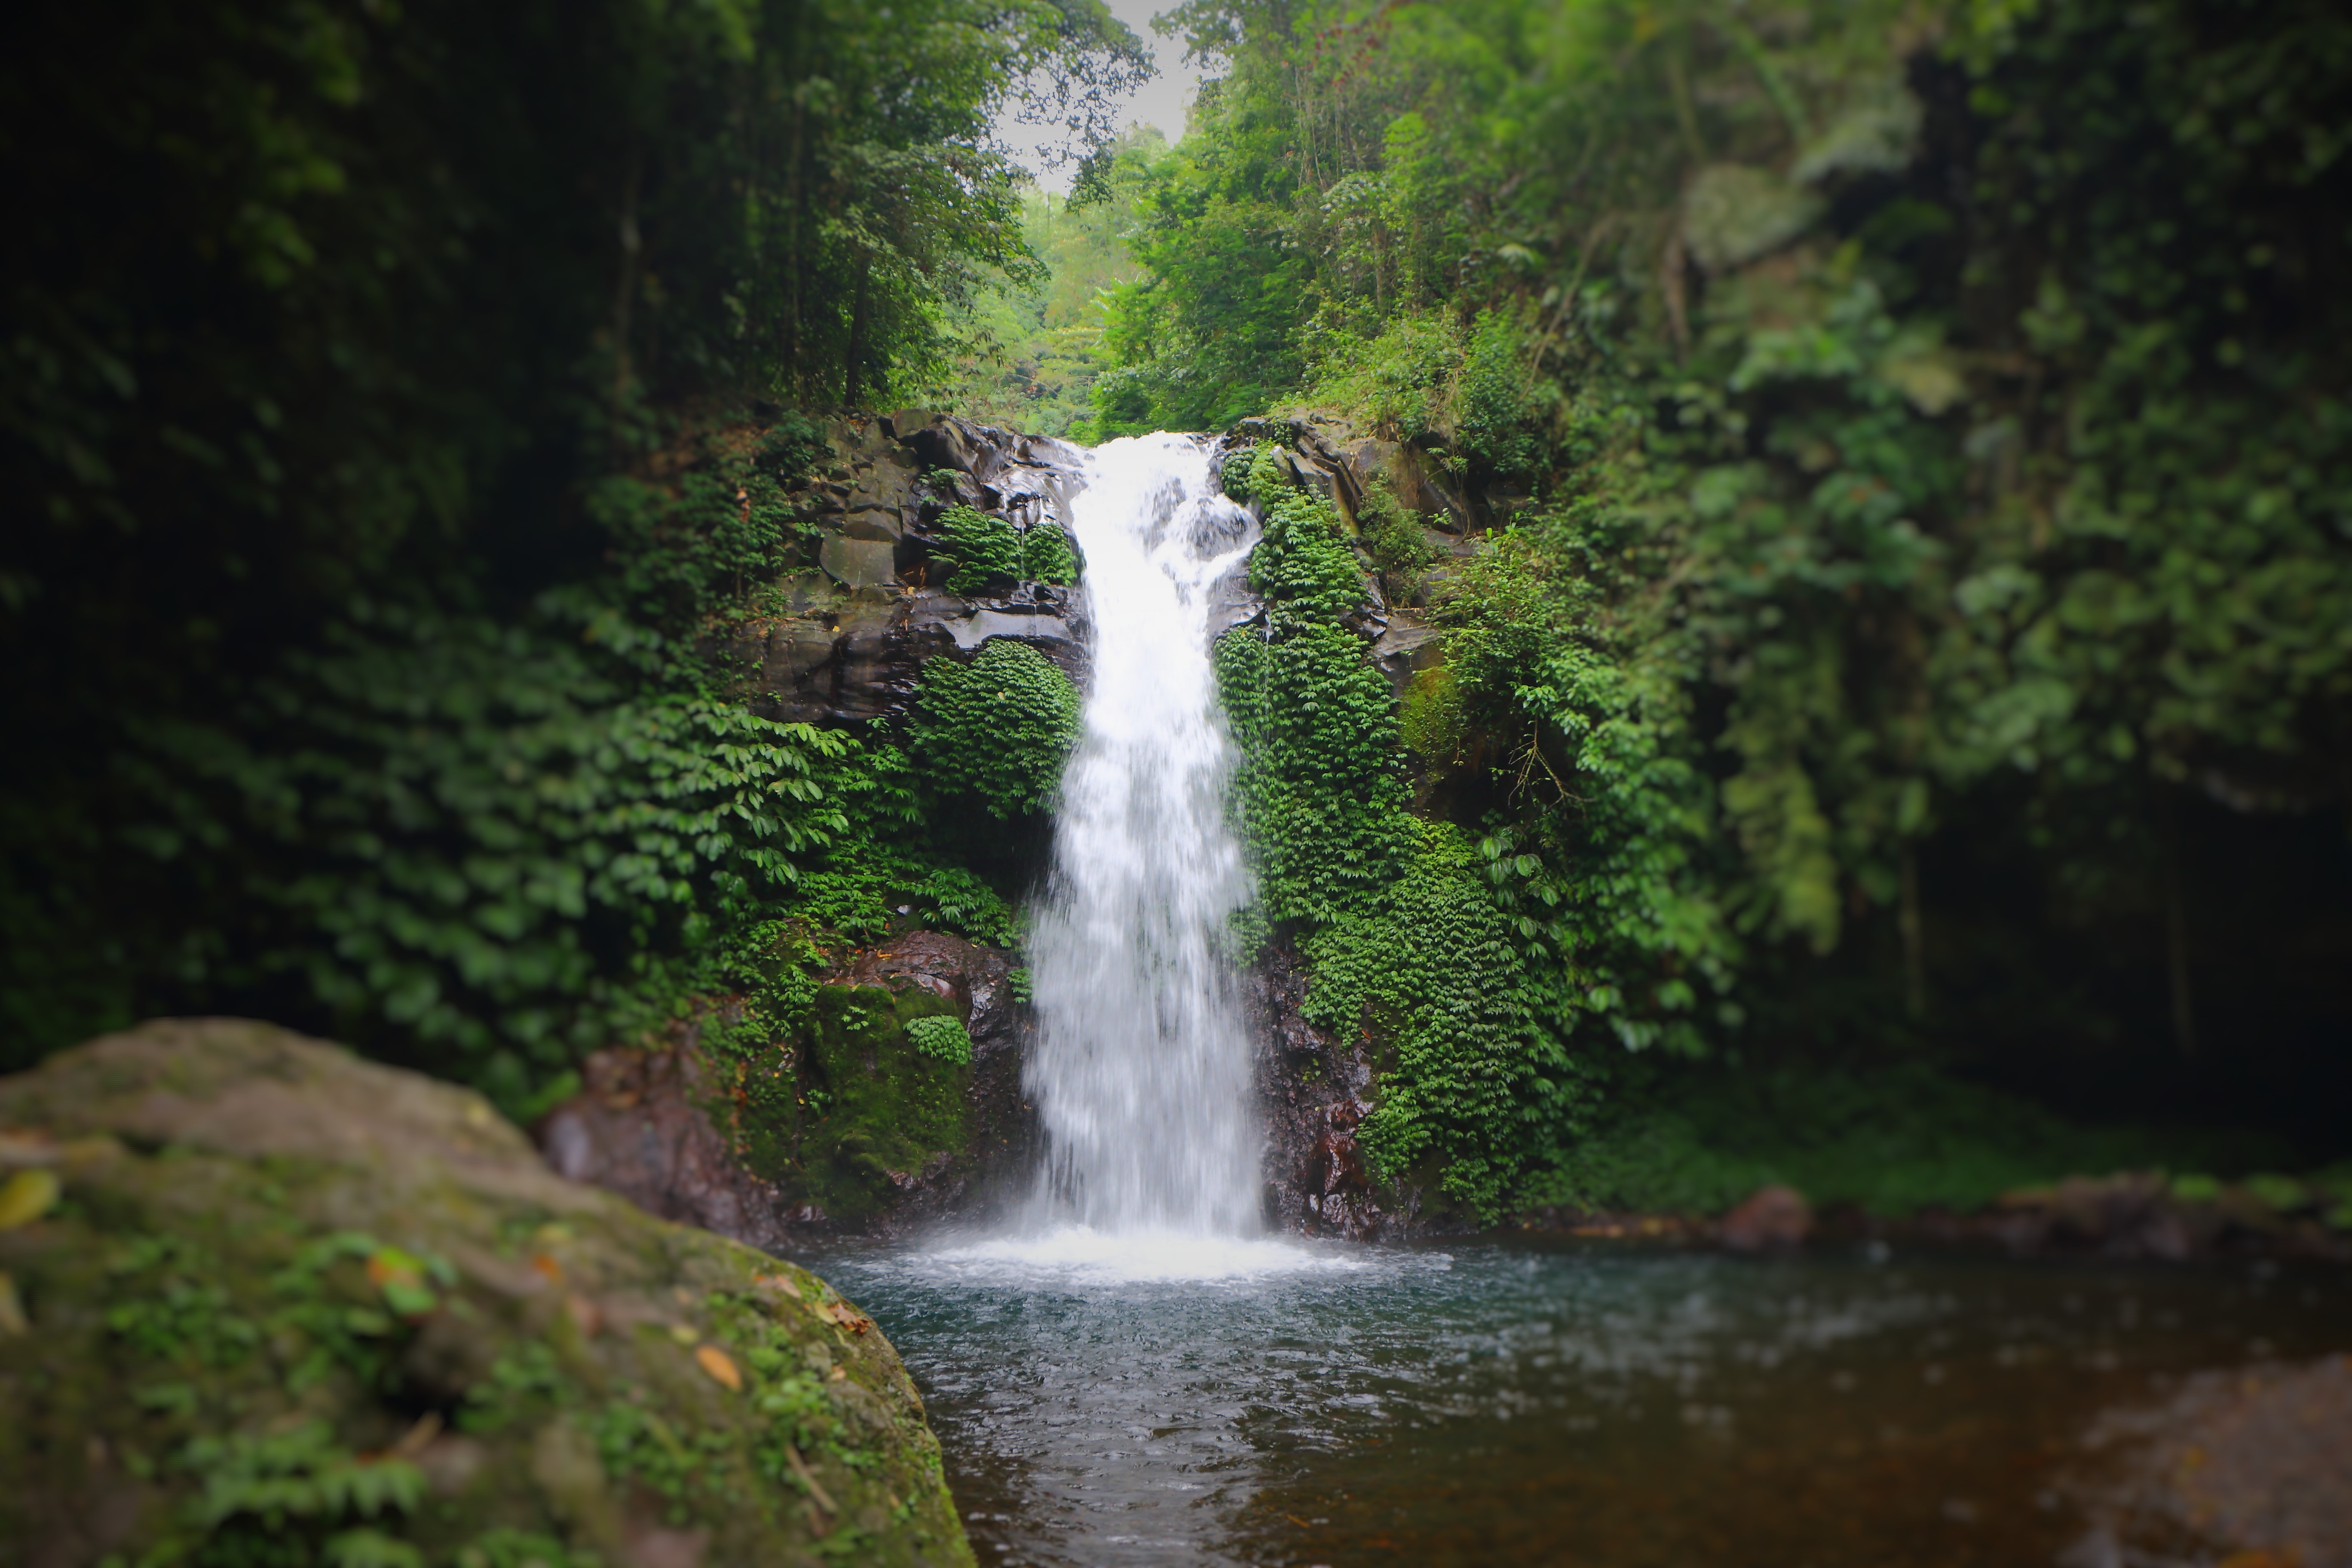 File:Gitgit waterfalls in Bali; January 2015.jpg - Wikimedia Commons